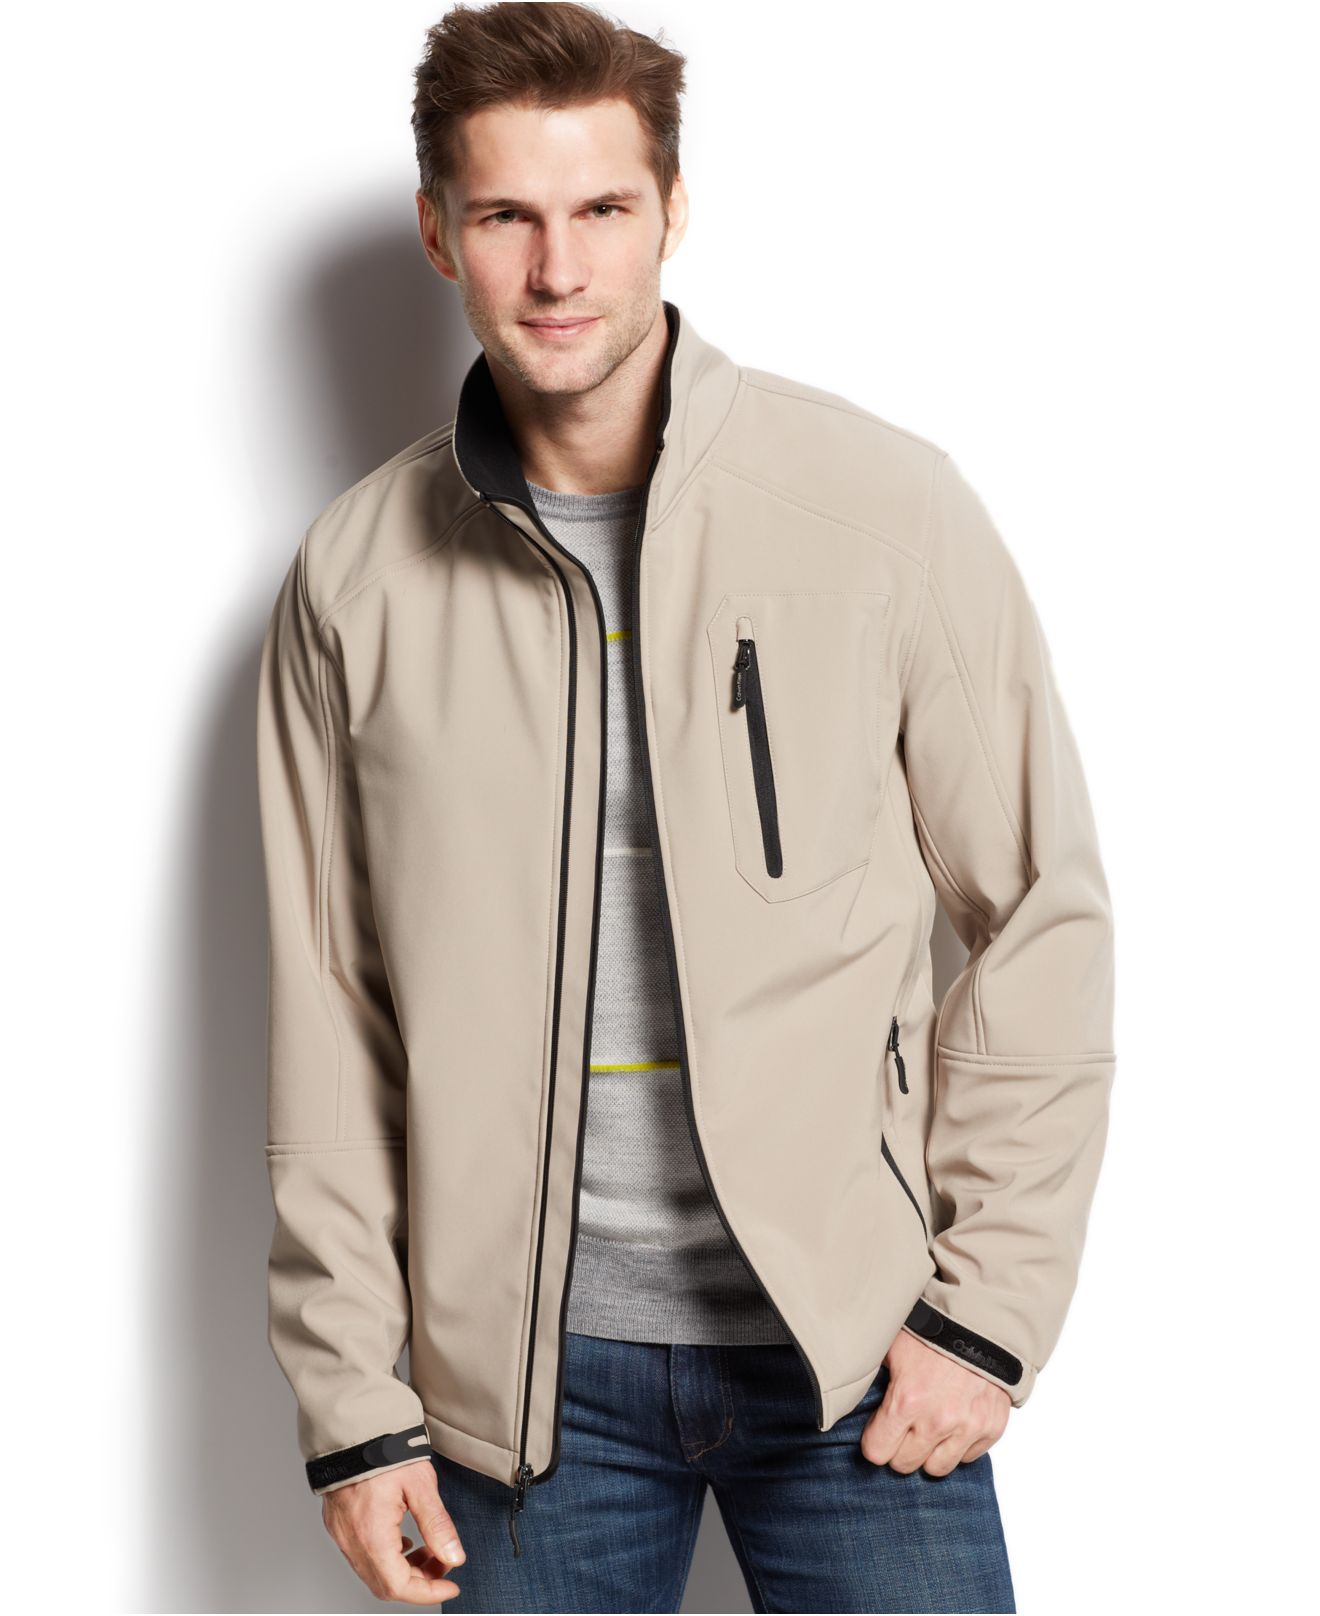 Calvin Klein Full-zip Softshell Jacket in Taupe (Brown) for Men - Lyst